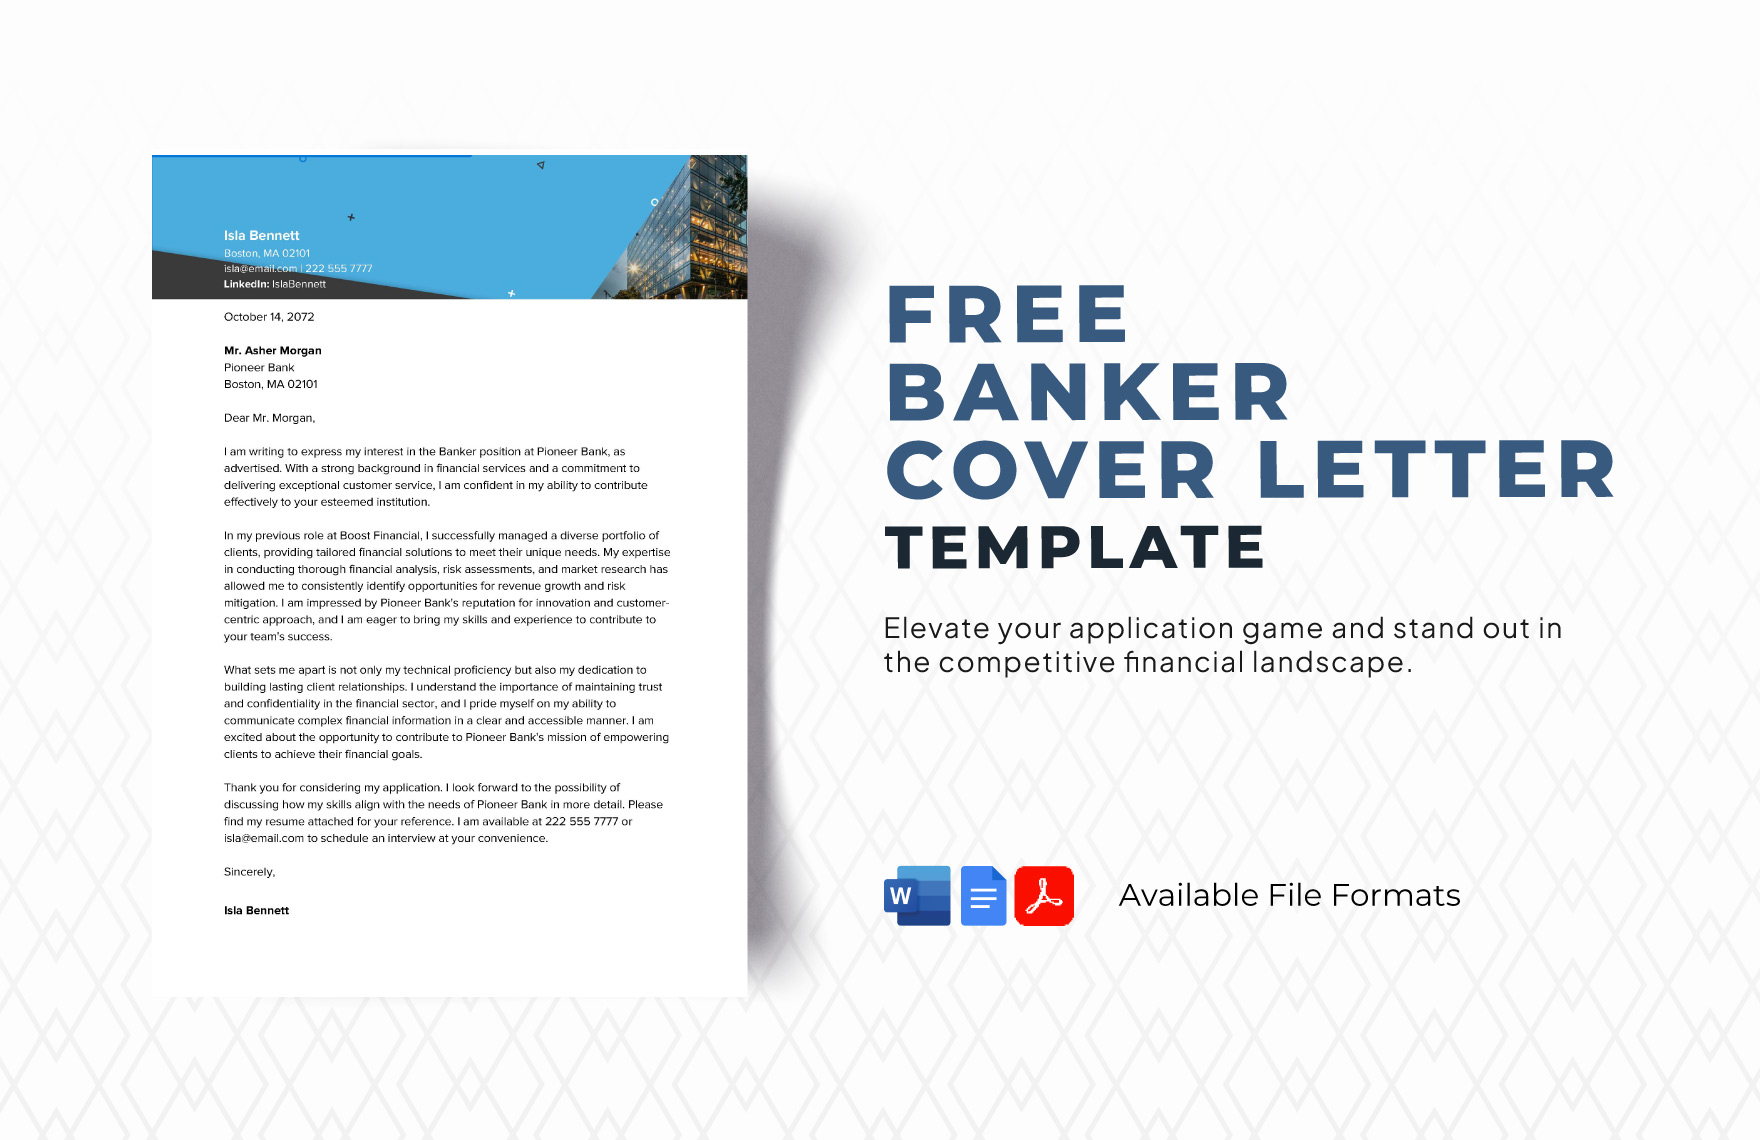 Banker Cover Letter Template